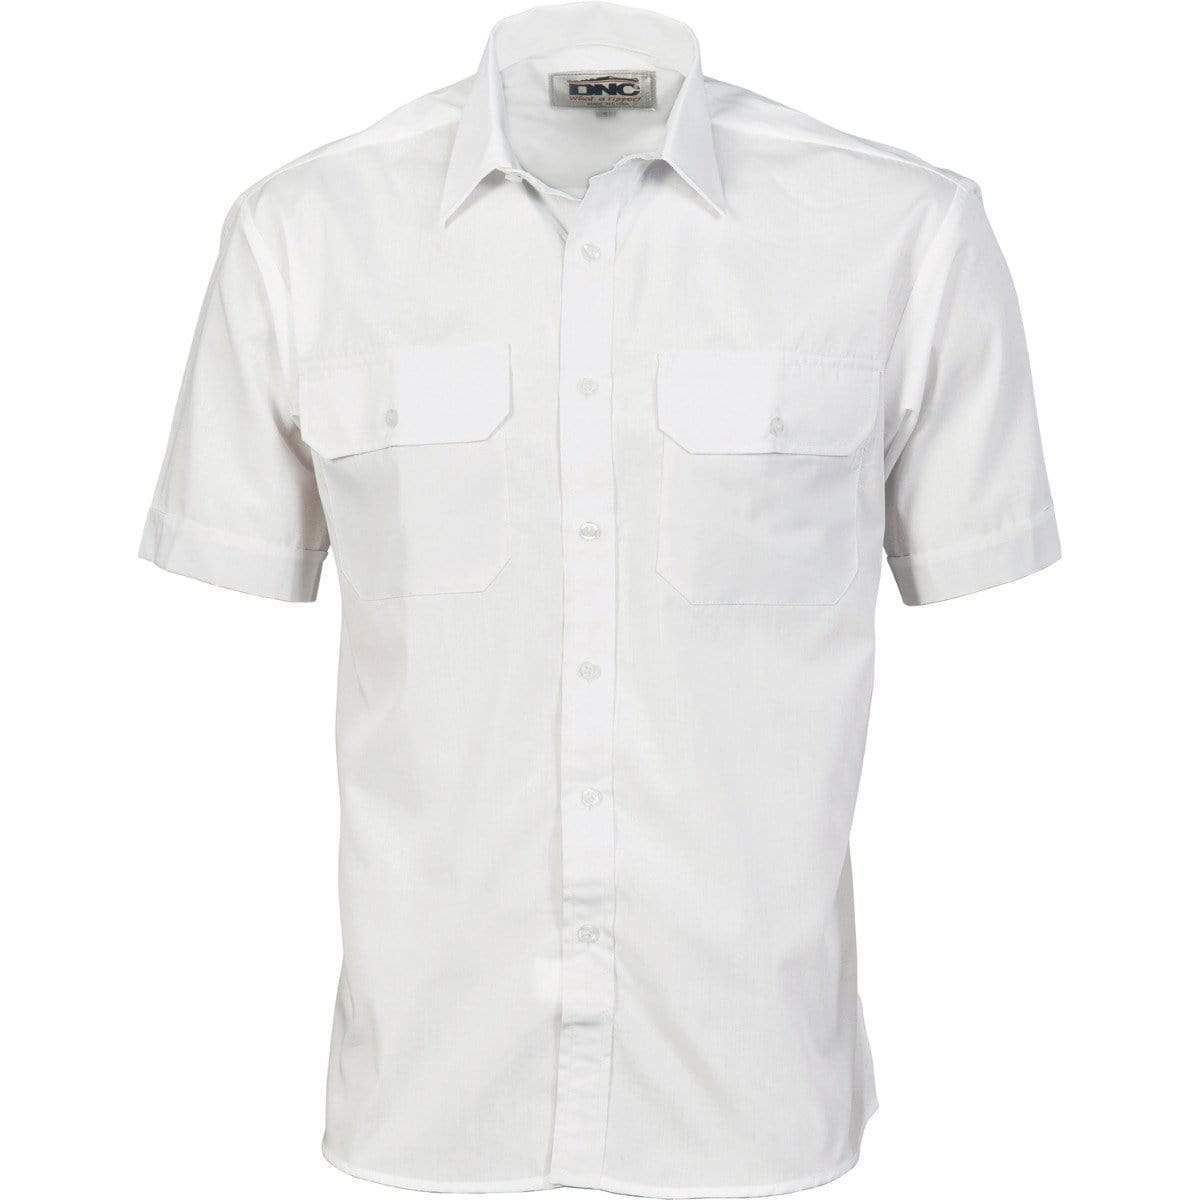 Dnc Workwear Polyester Cotton Short Sleeve Work Shirt - 3211 Work Wear DNC Workwear White XS 